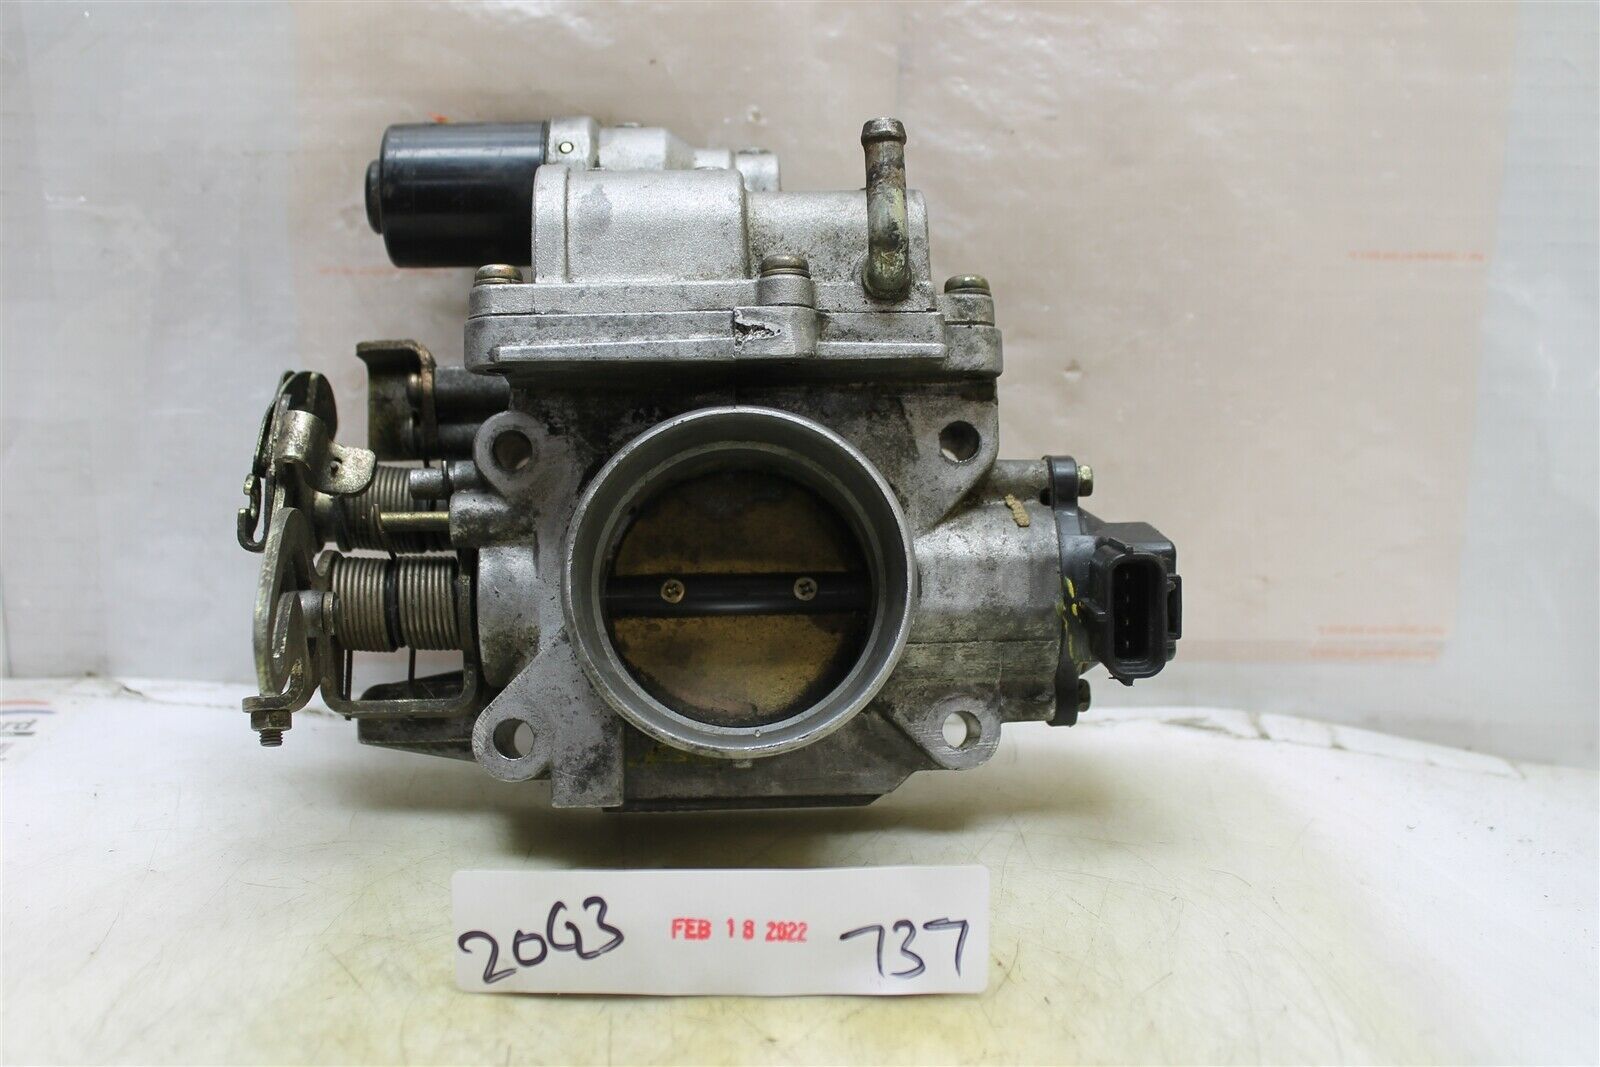 1999 Mazda Throttle Body Valve Assembly 1959003532 OEM 737 20G3 - $214.69